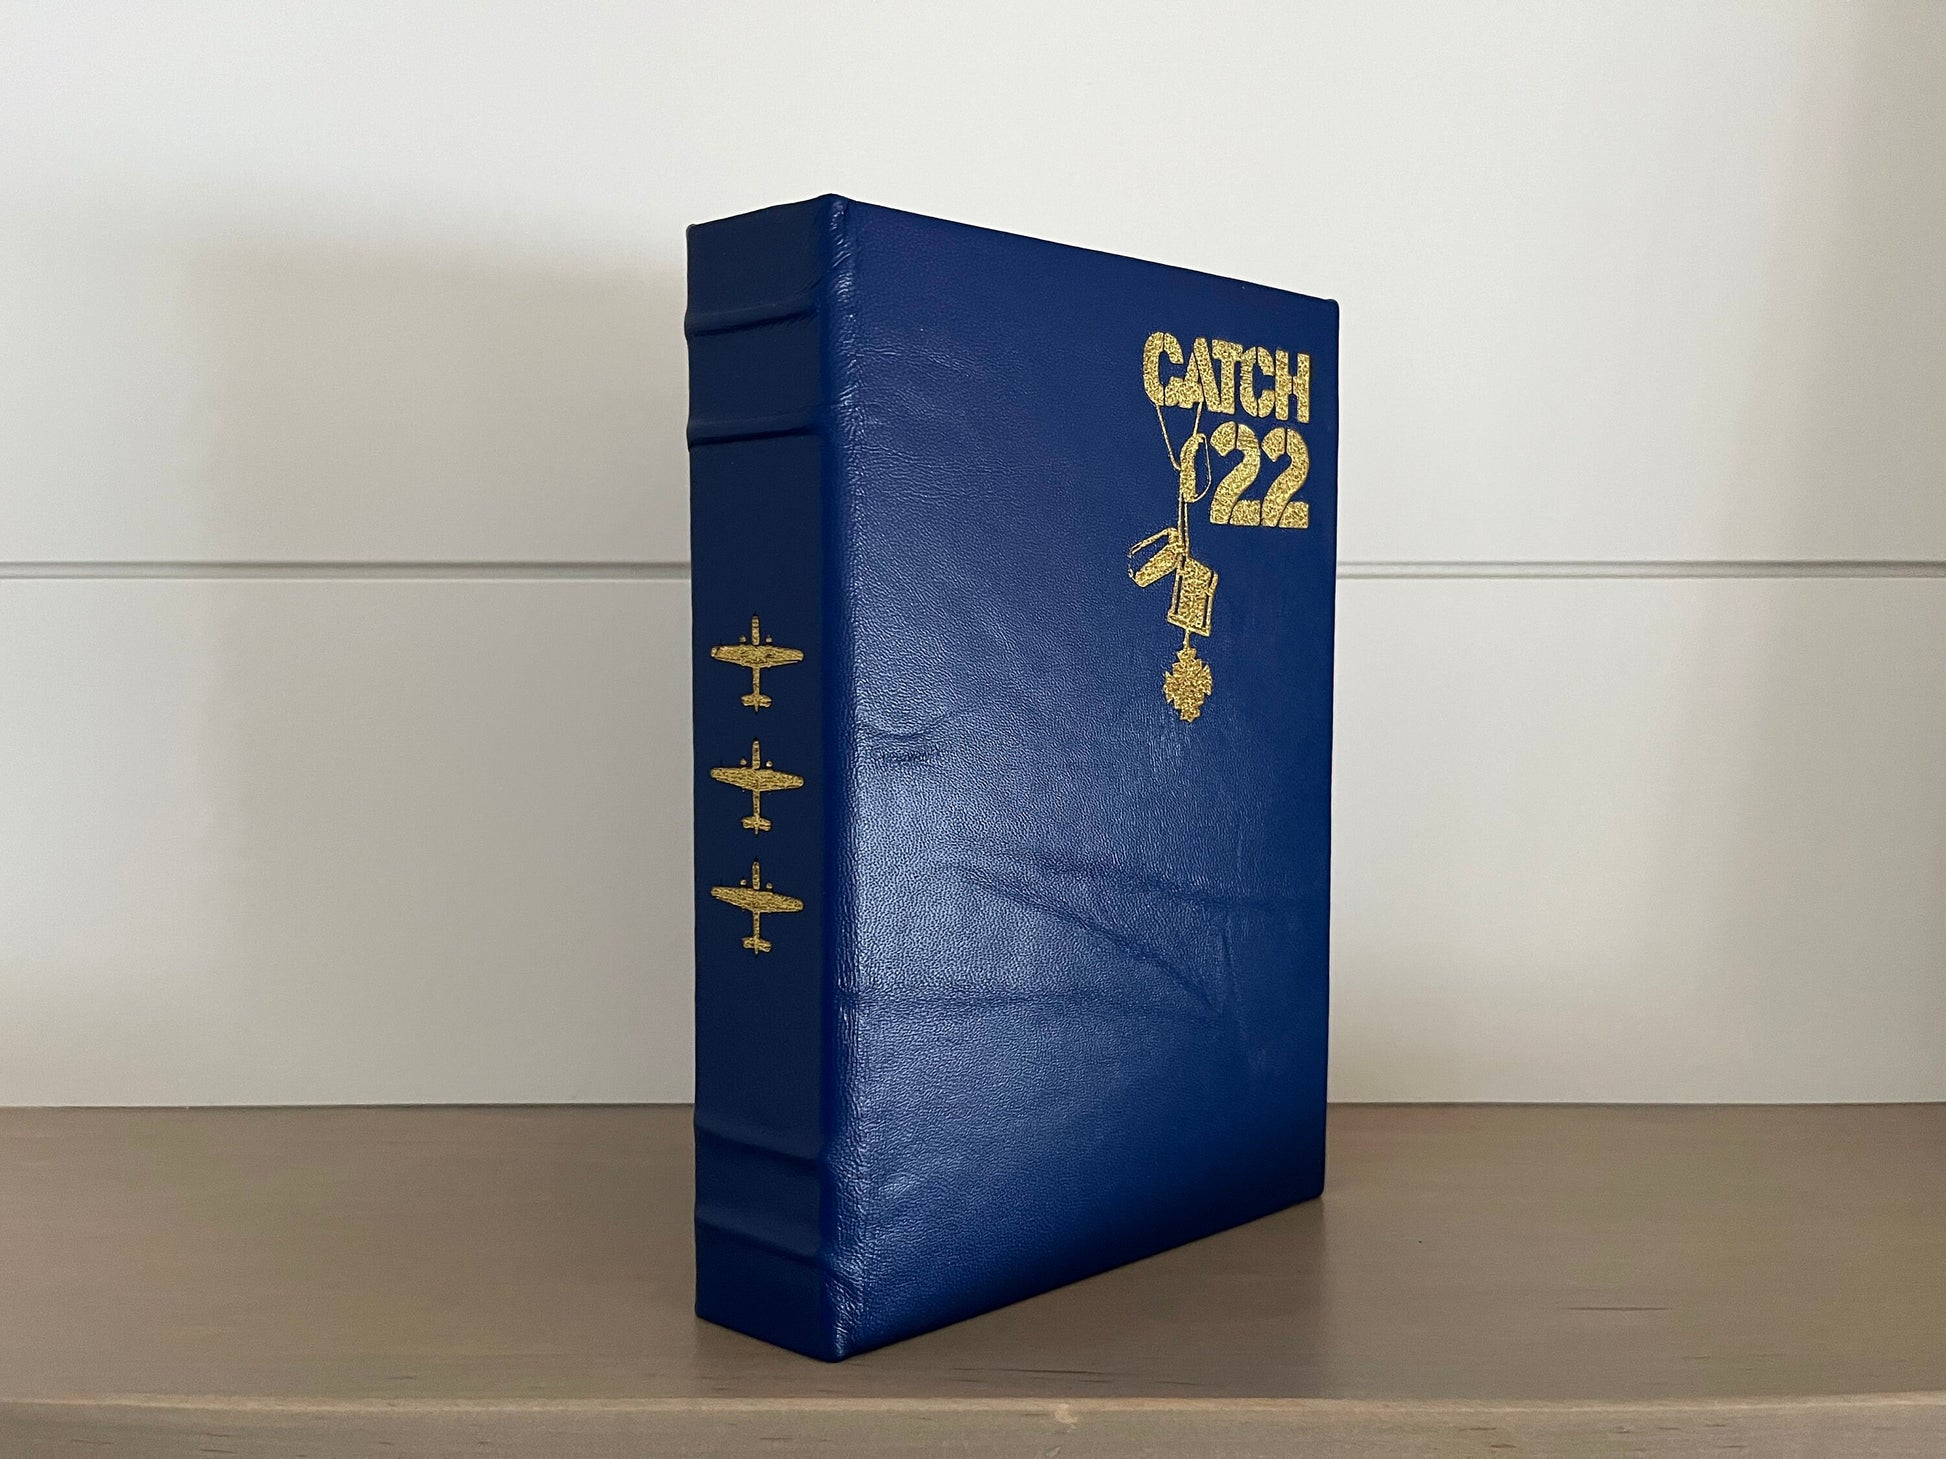 CATCH 22 - by Joseph Heller - Handmade Leatherbound - Premium Leather Bound Book